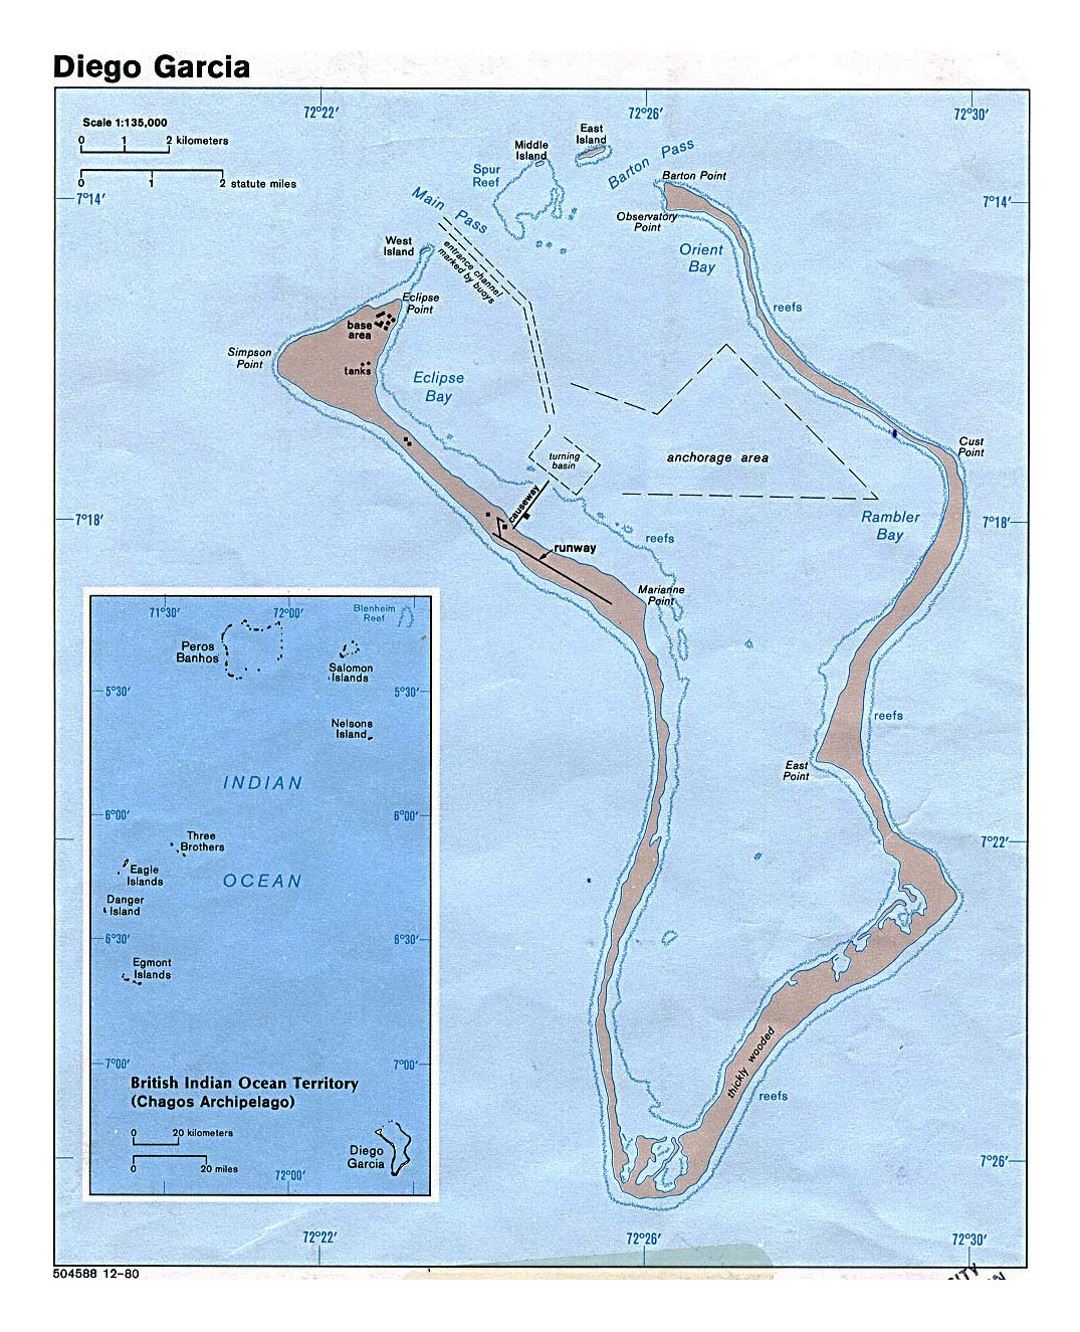 Detailed map of Diego Garcia island - 1980